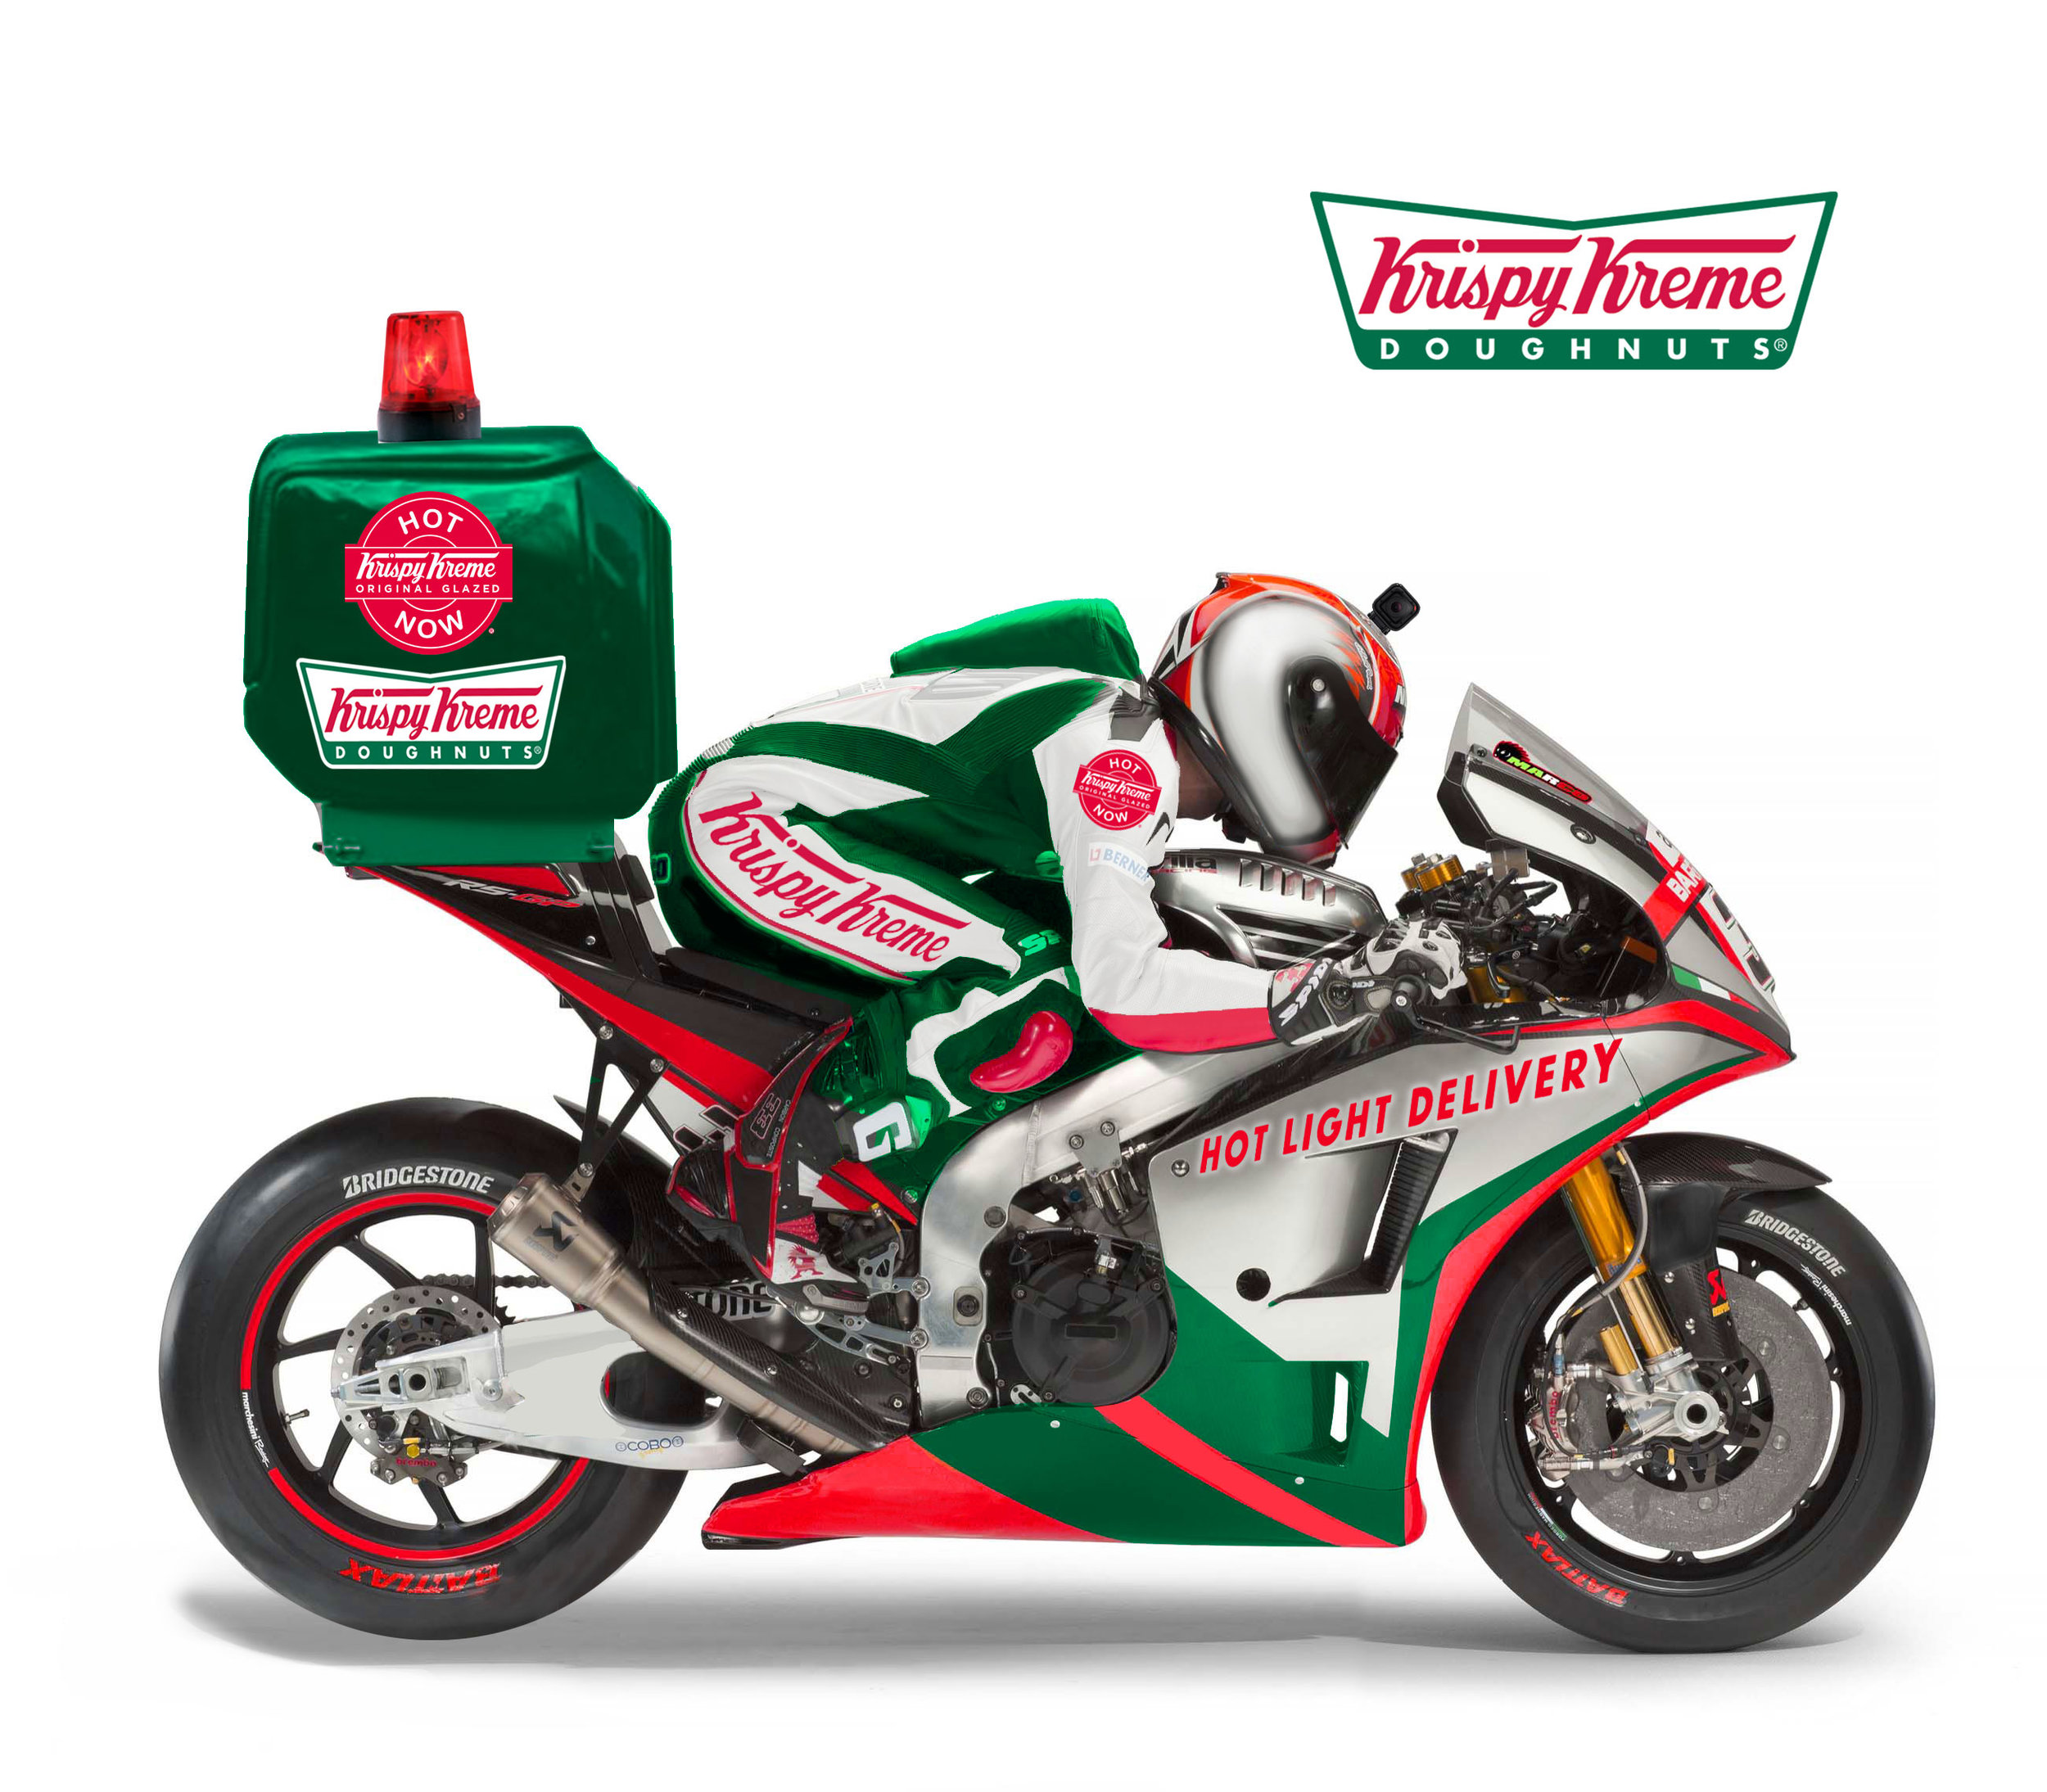 Krispy Kreme 'Hot Light' delivery bike